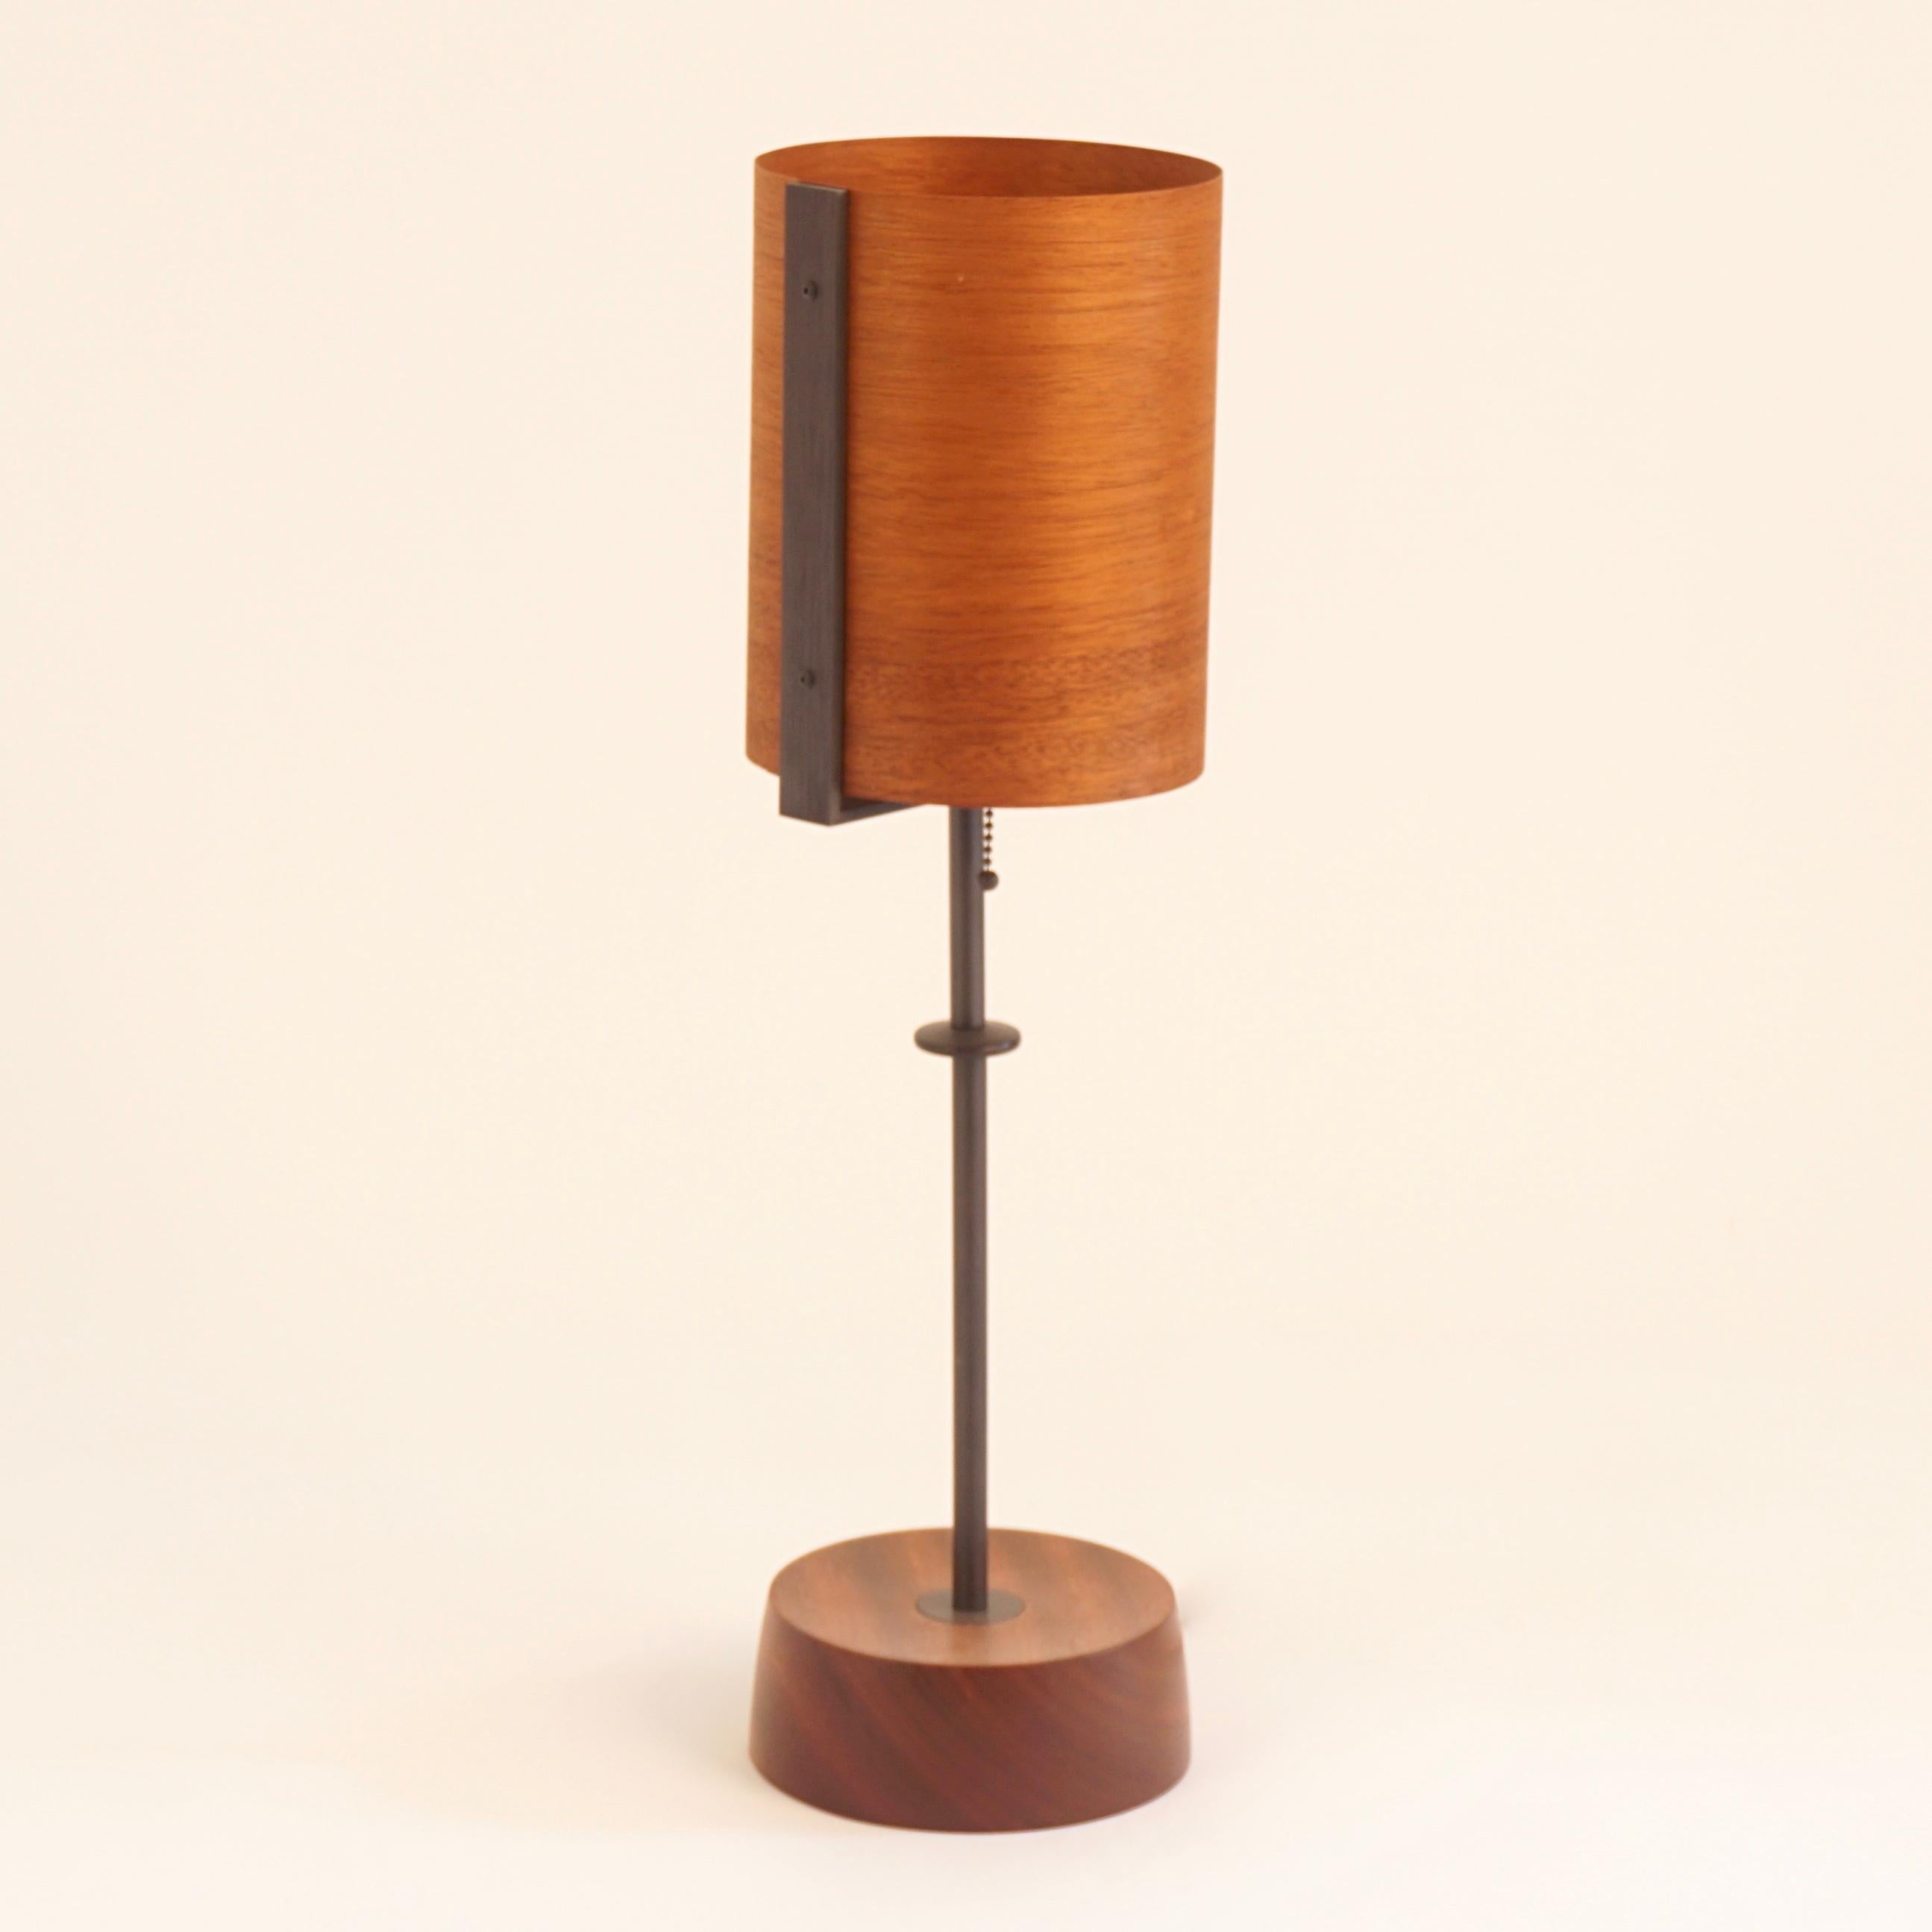 American Mahogany Wood Veneer Table Lamp #2 with Blackened Bronze Frame For Sale